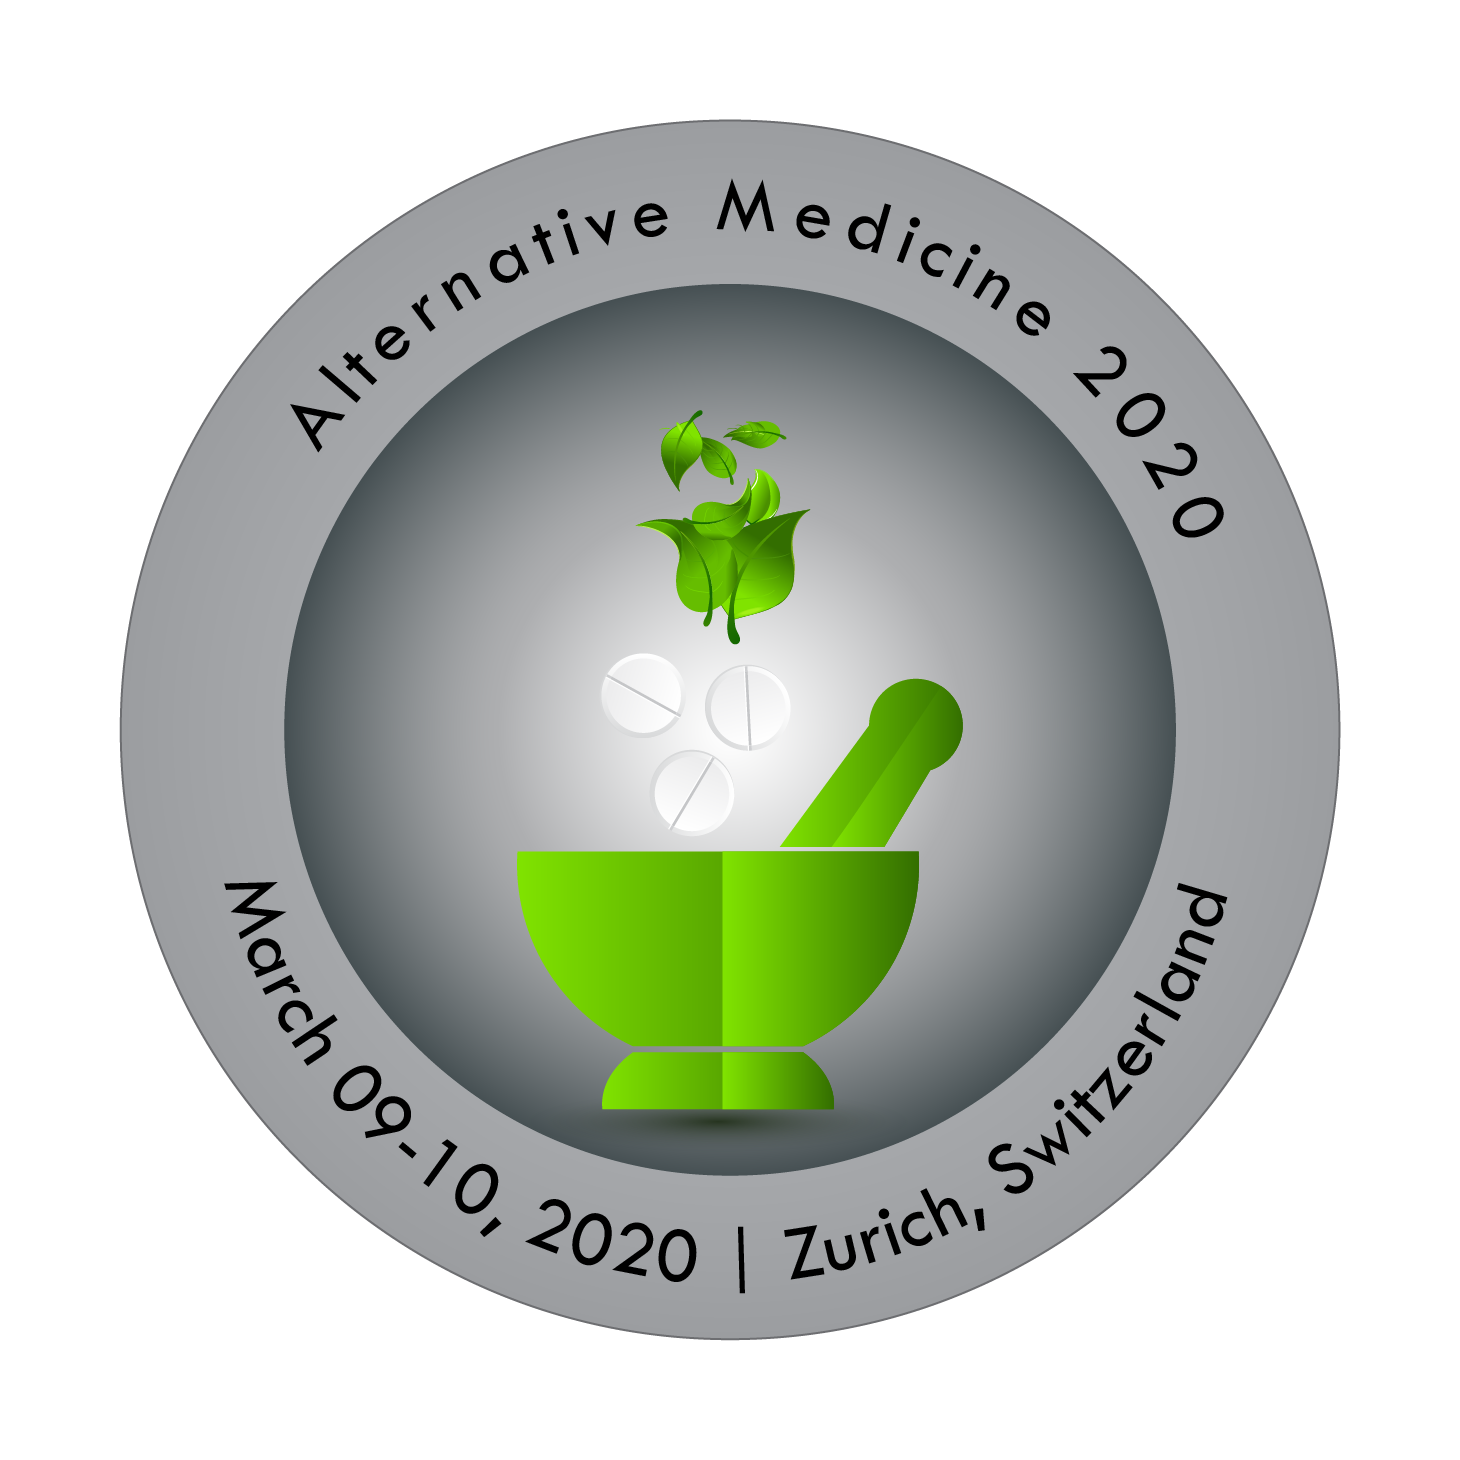 2nd International Conference on Alternative Medicine